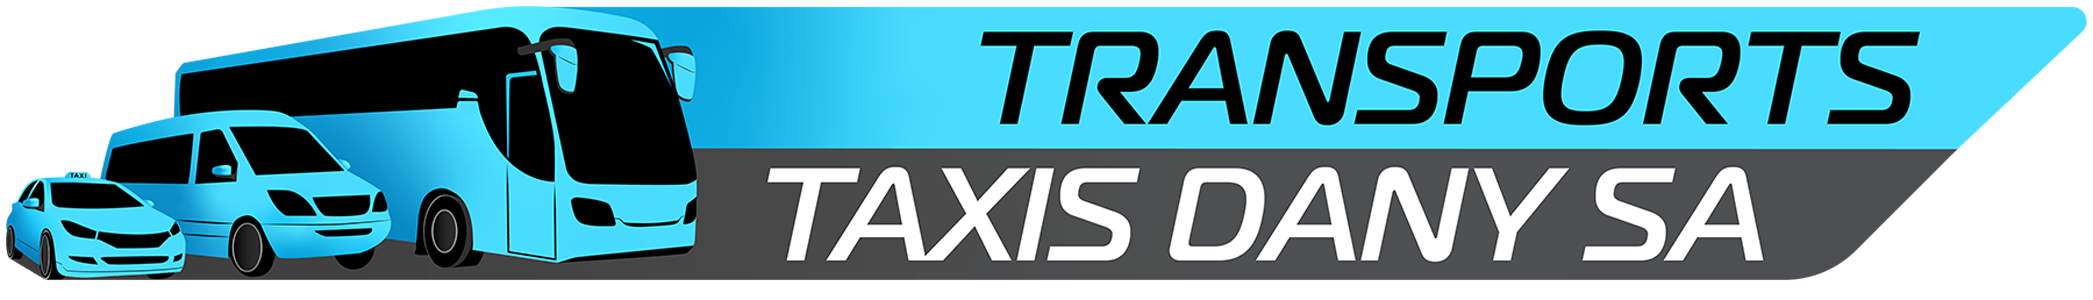 Logo - Transport taxis dany sa